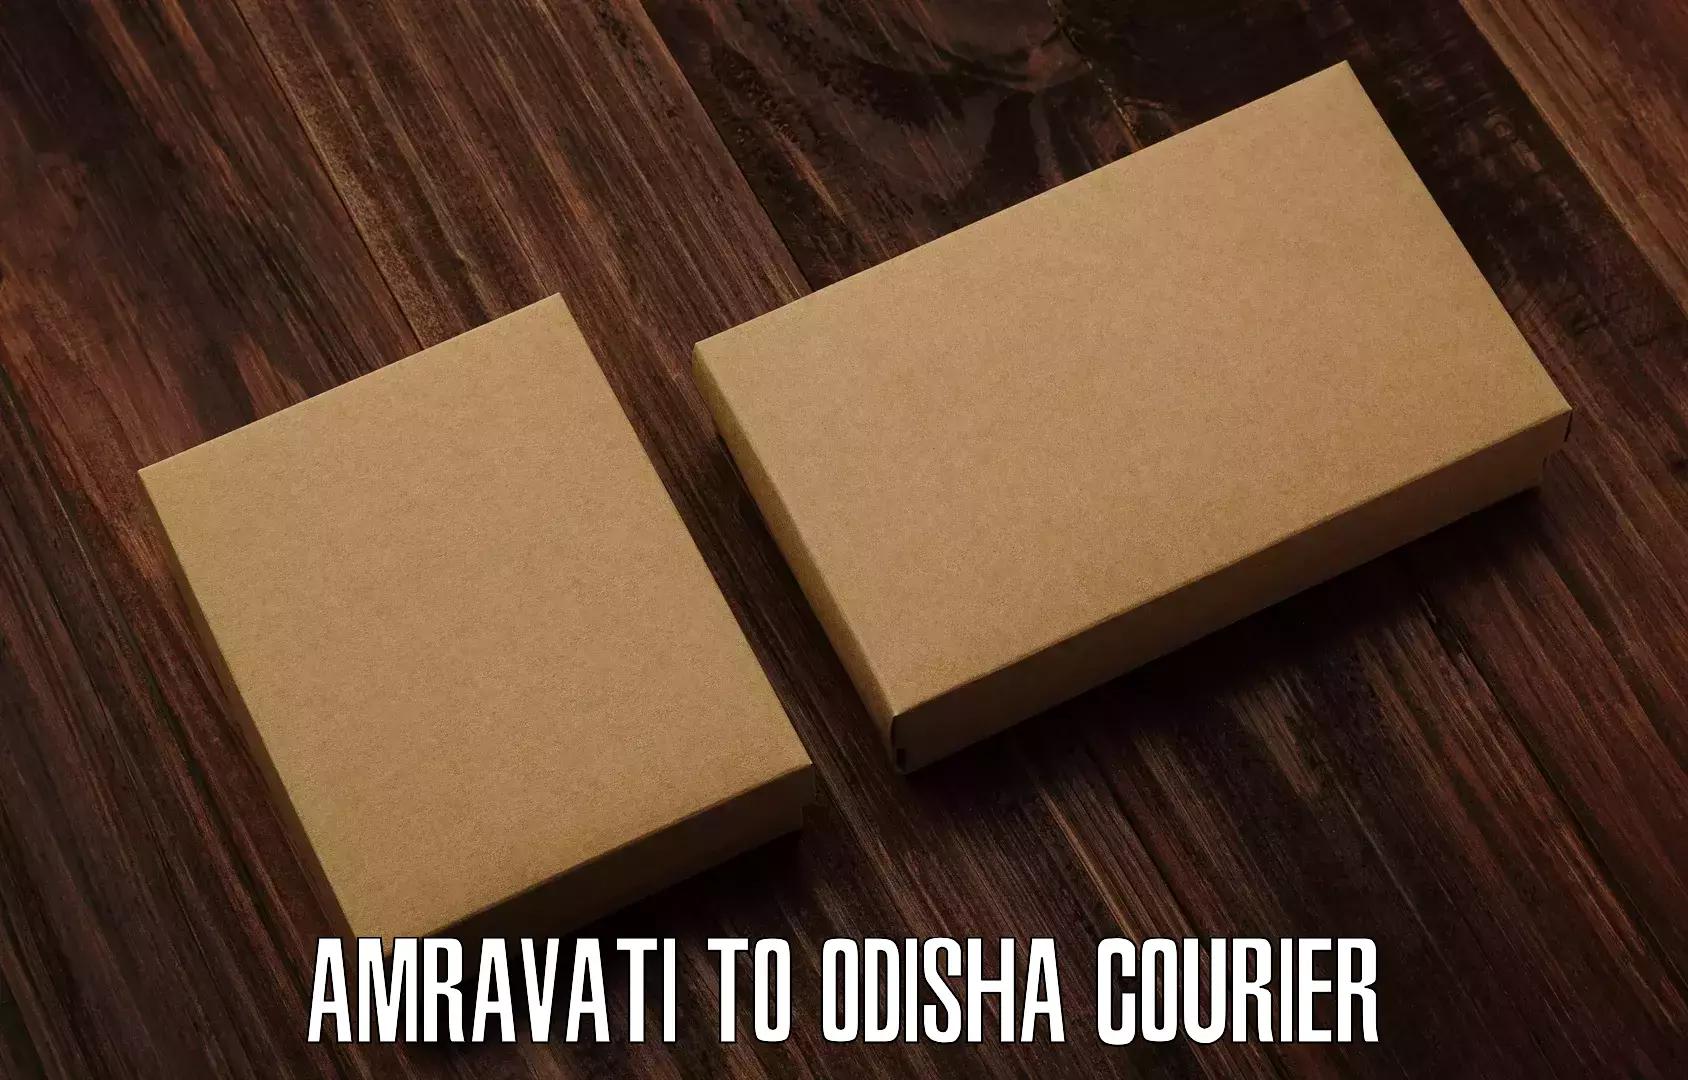 Global courier networks Amravati to Odisha